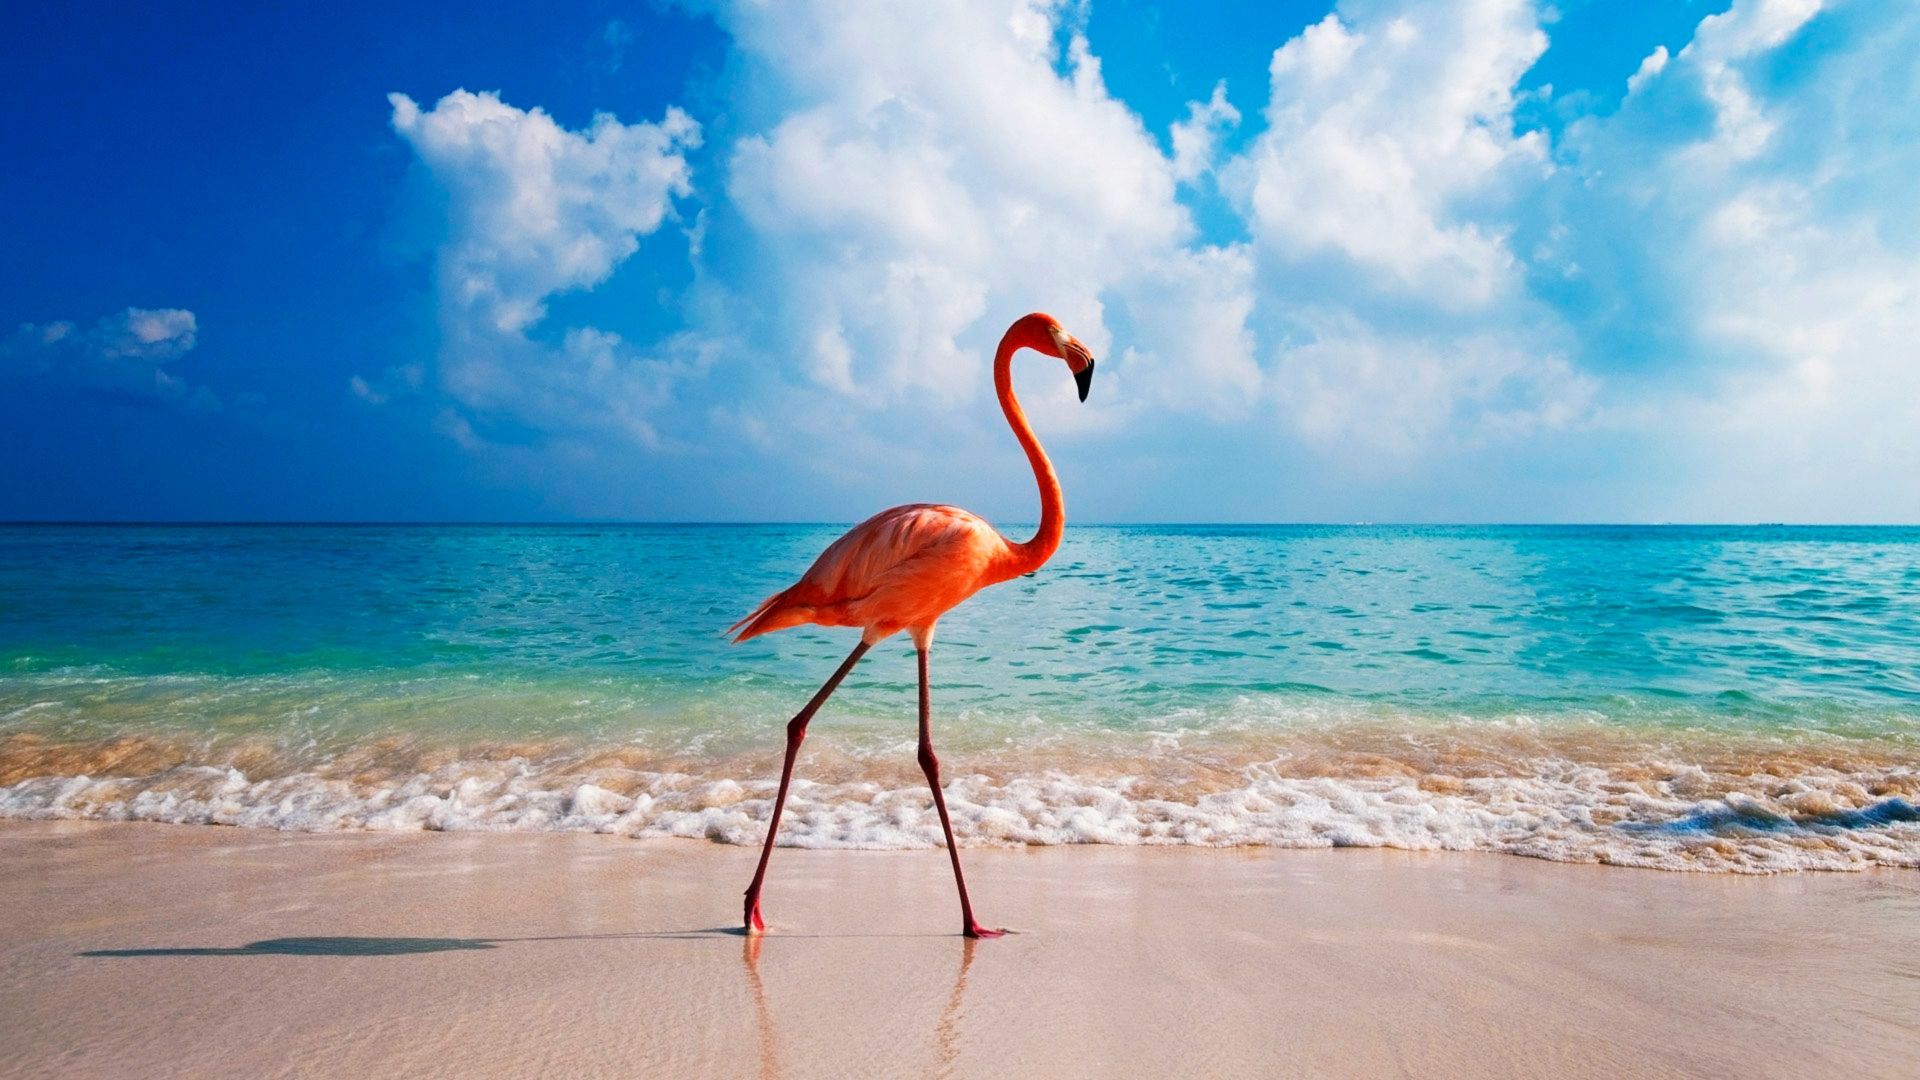 фламинго, птица, пляж, flamingo, bird, beach, ocean, 4k (horizontal)